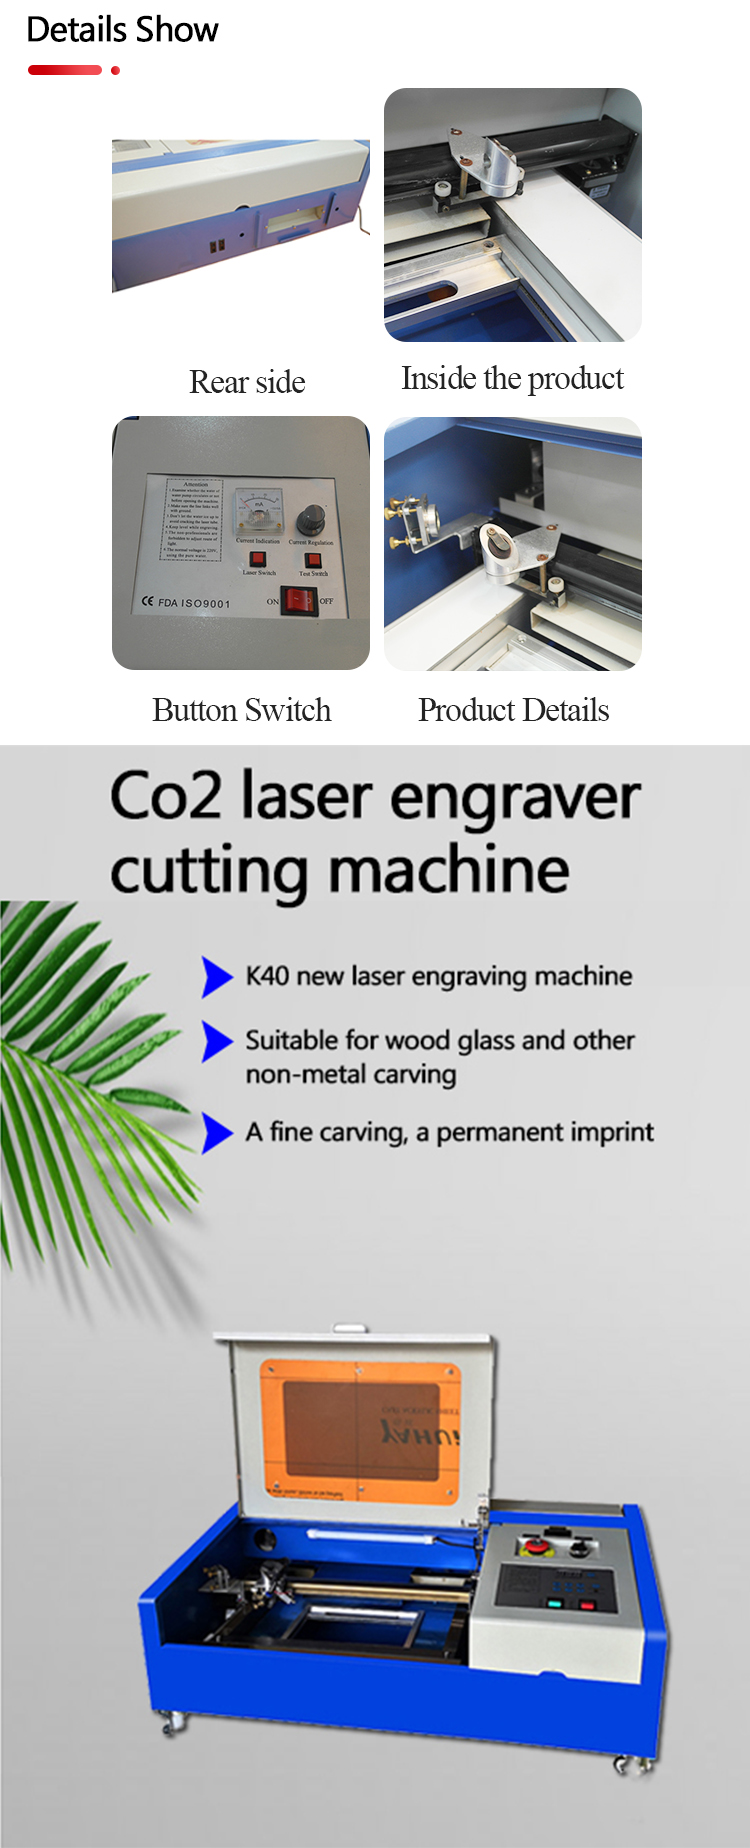 co2 laser engraver-details show